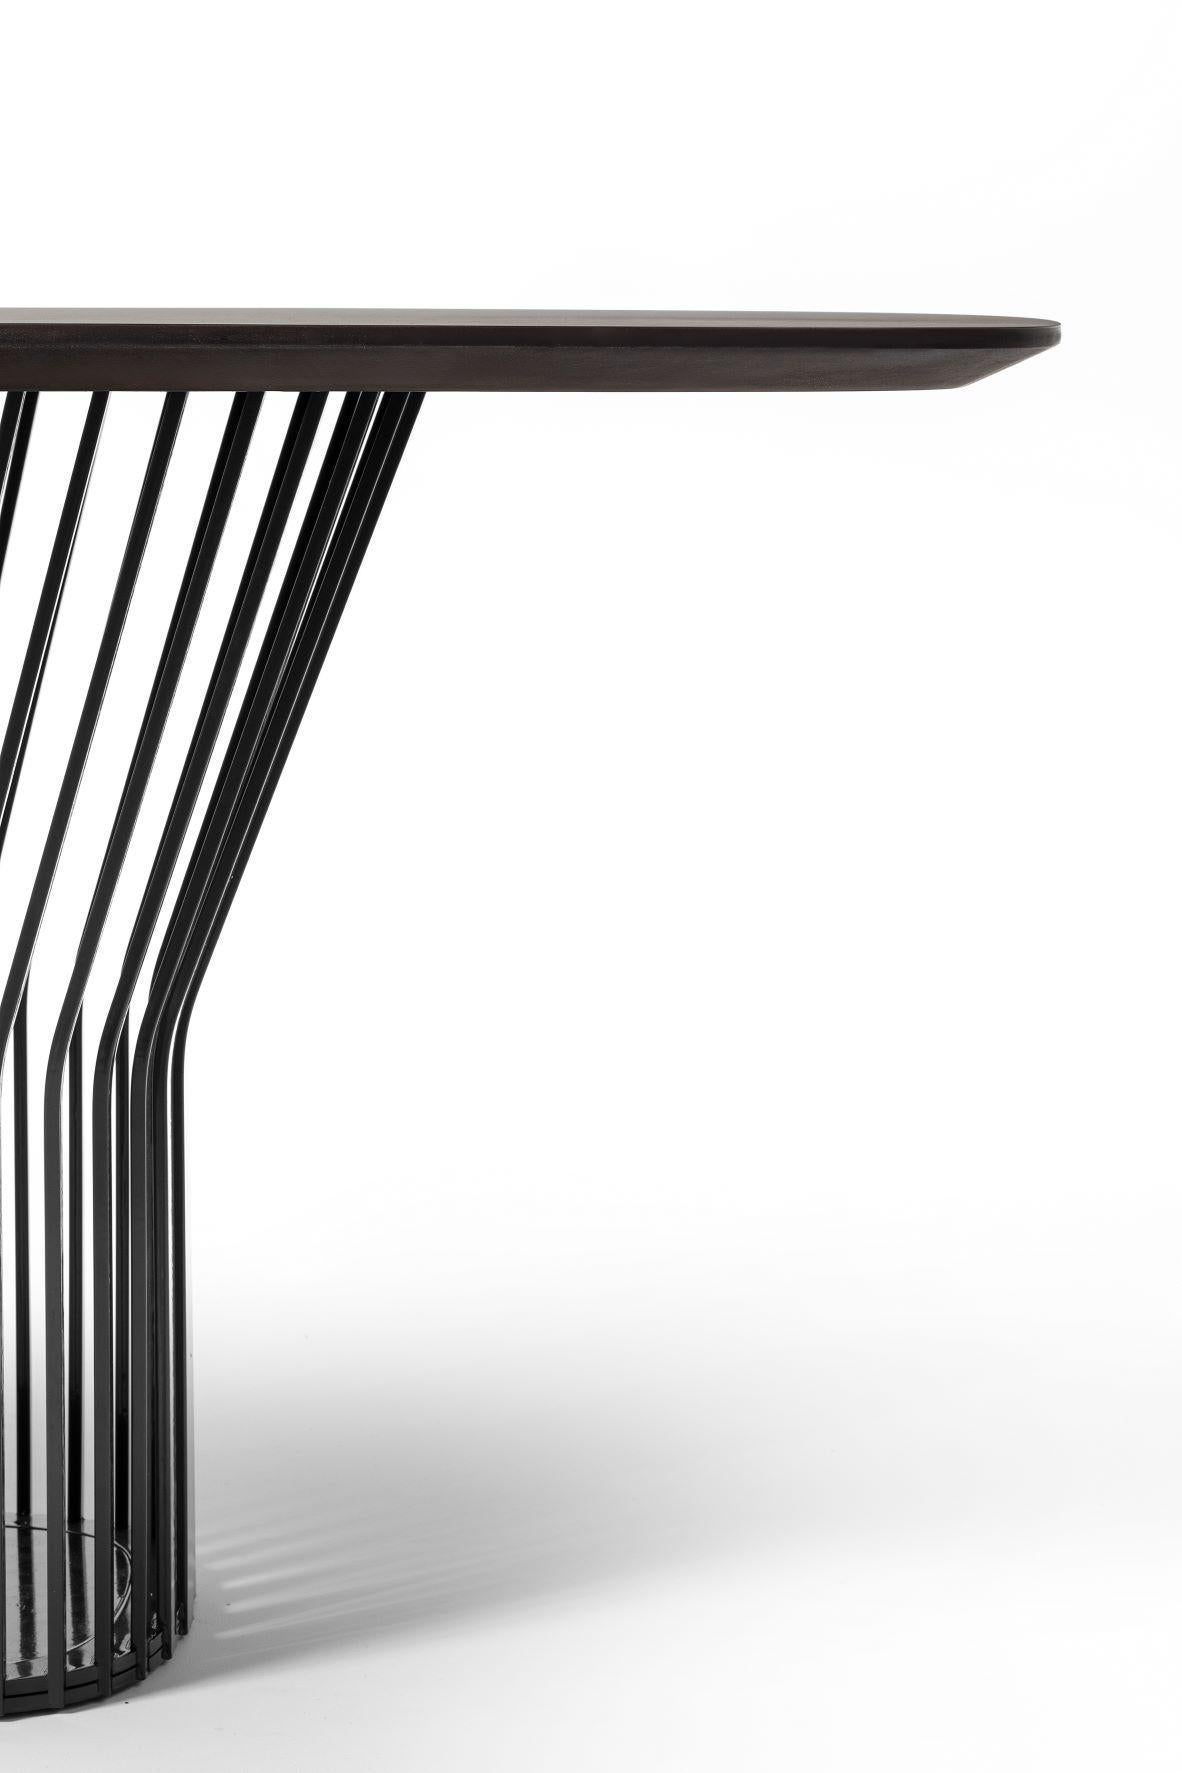 European Ray Table 0142, Metal, Design, Living, Wood, Home, Table, Original, Black, Oak For Sale